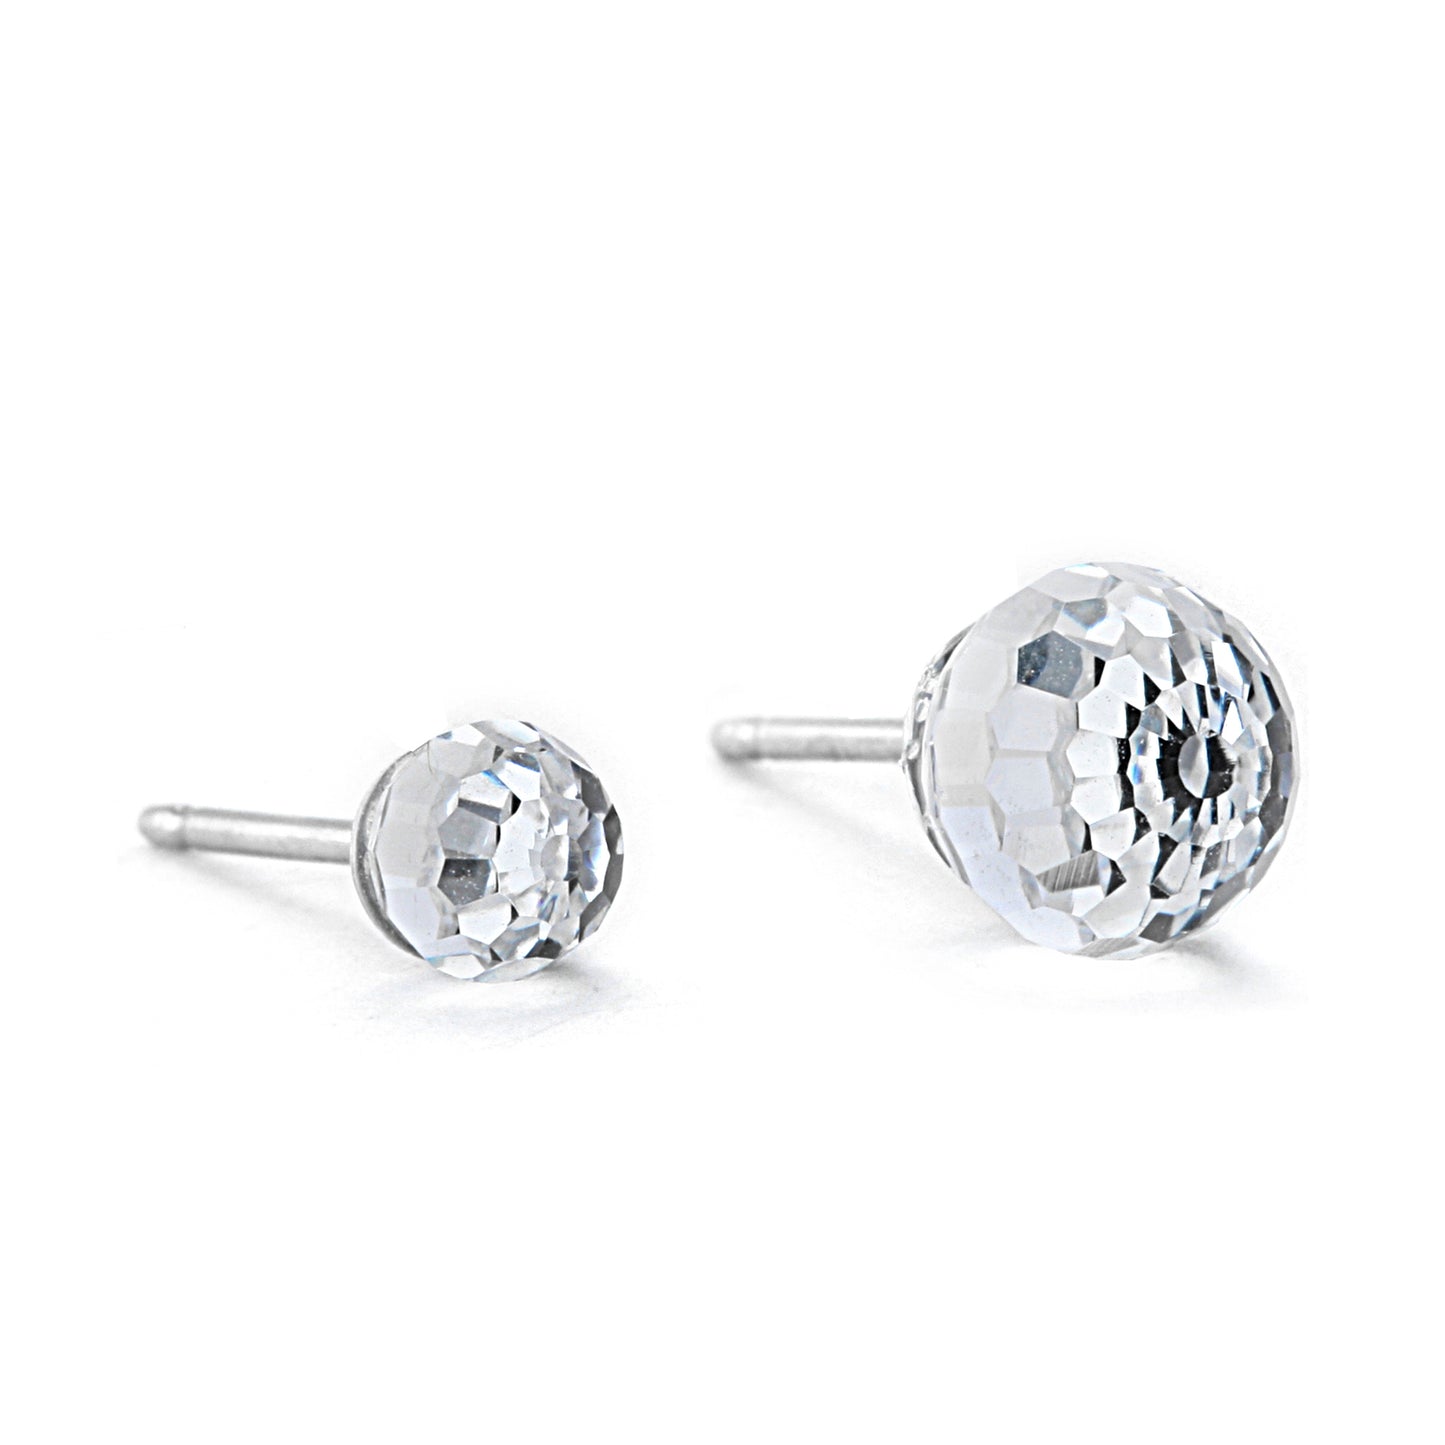 Swarovski Crystal Ball Button Earrings - Crystal